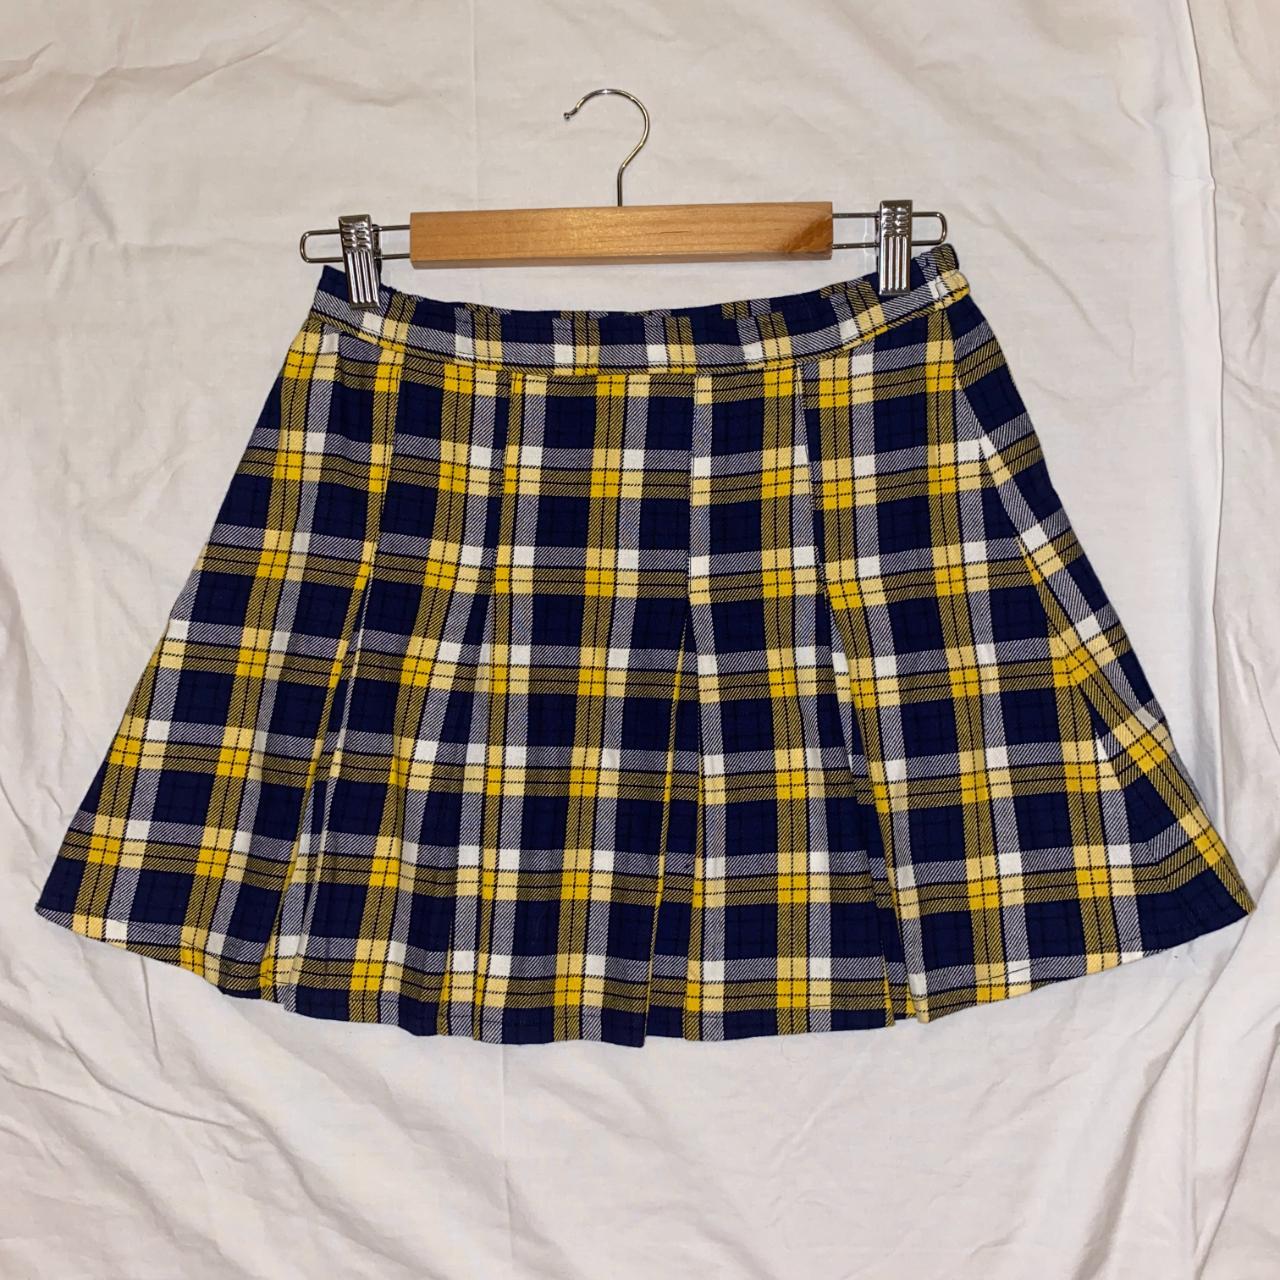 Neon Hart Pleated Skirt, never worn. - Depop